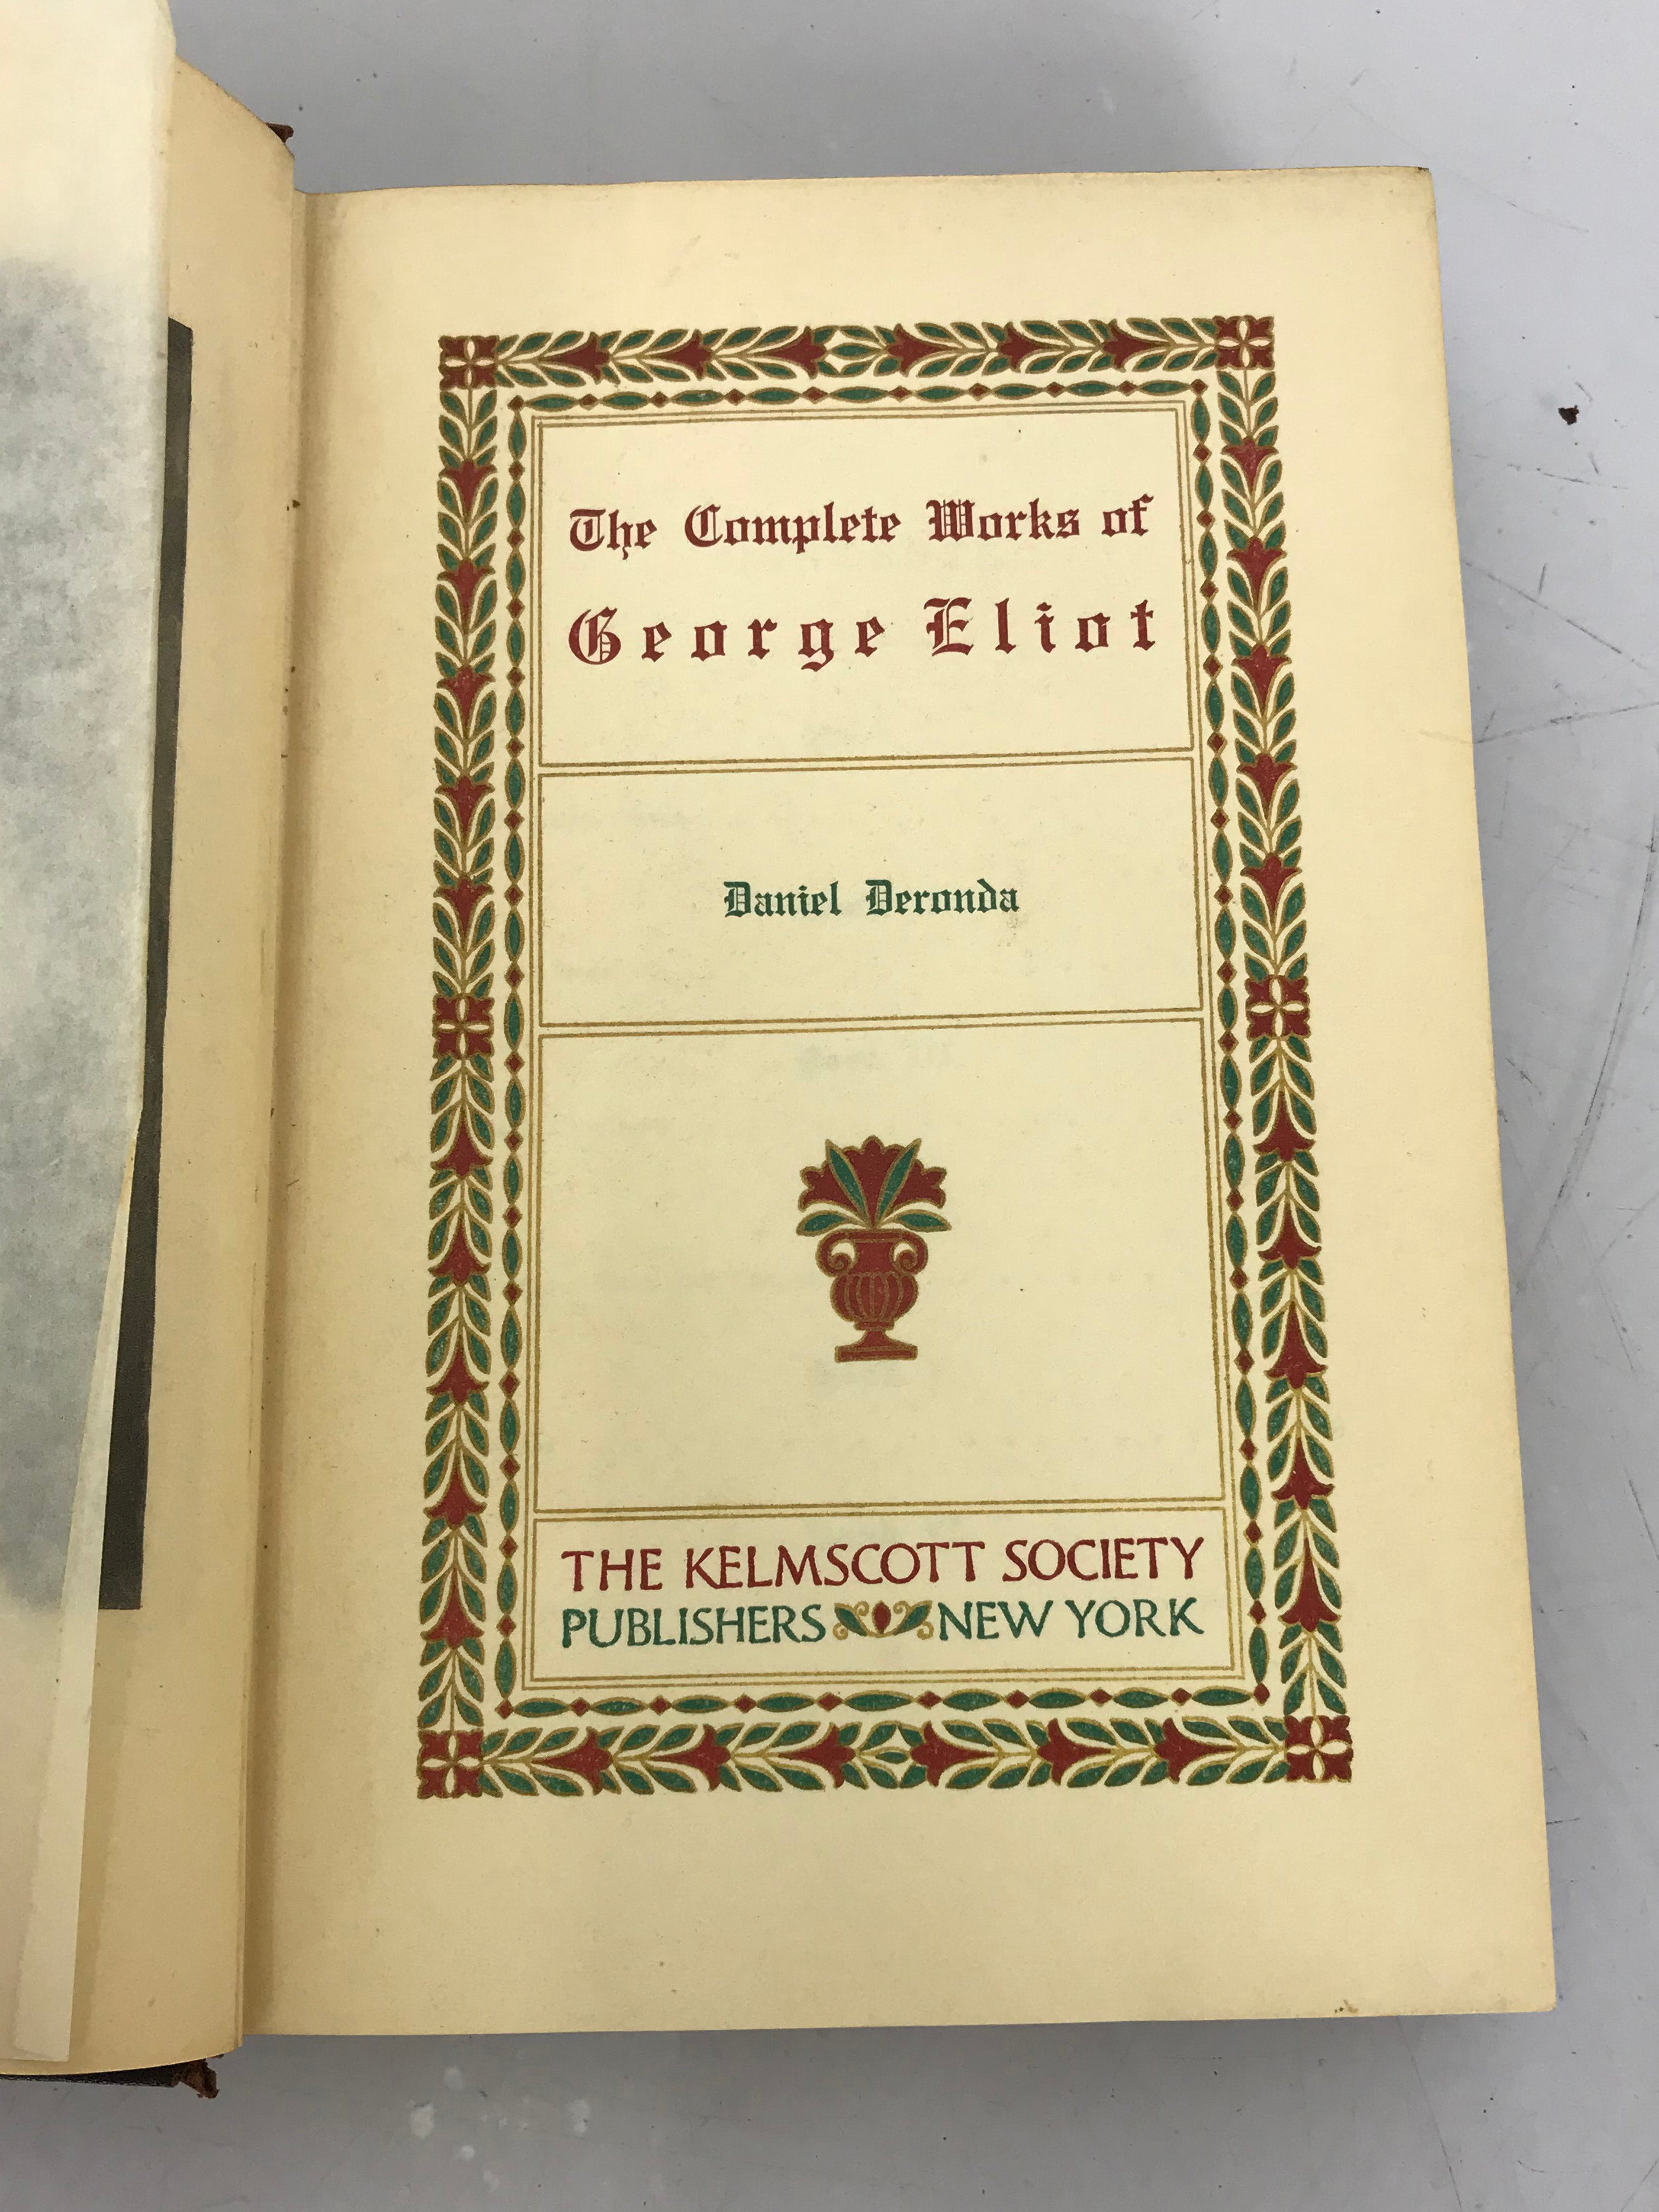 The Complete Works of George Eliot 4 Vols Kelmscott Society